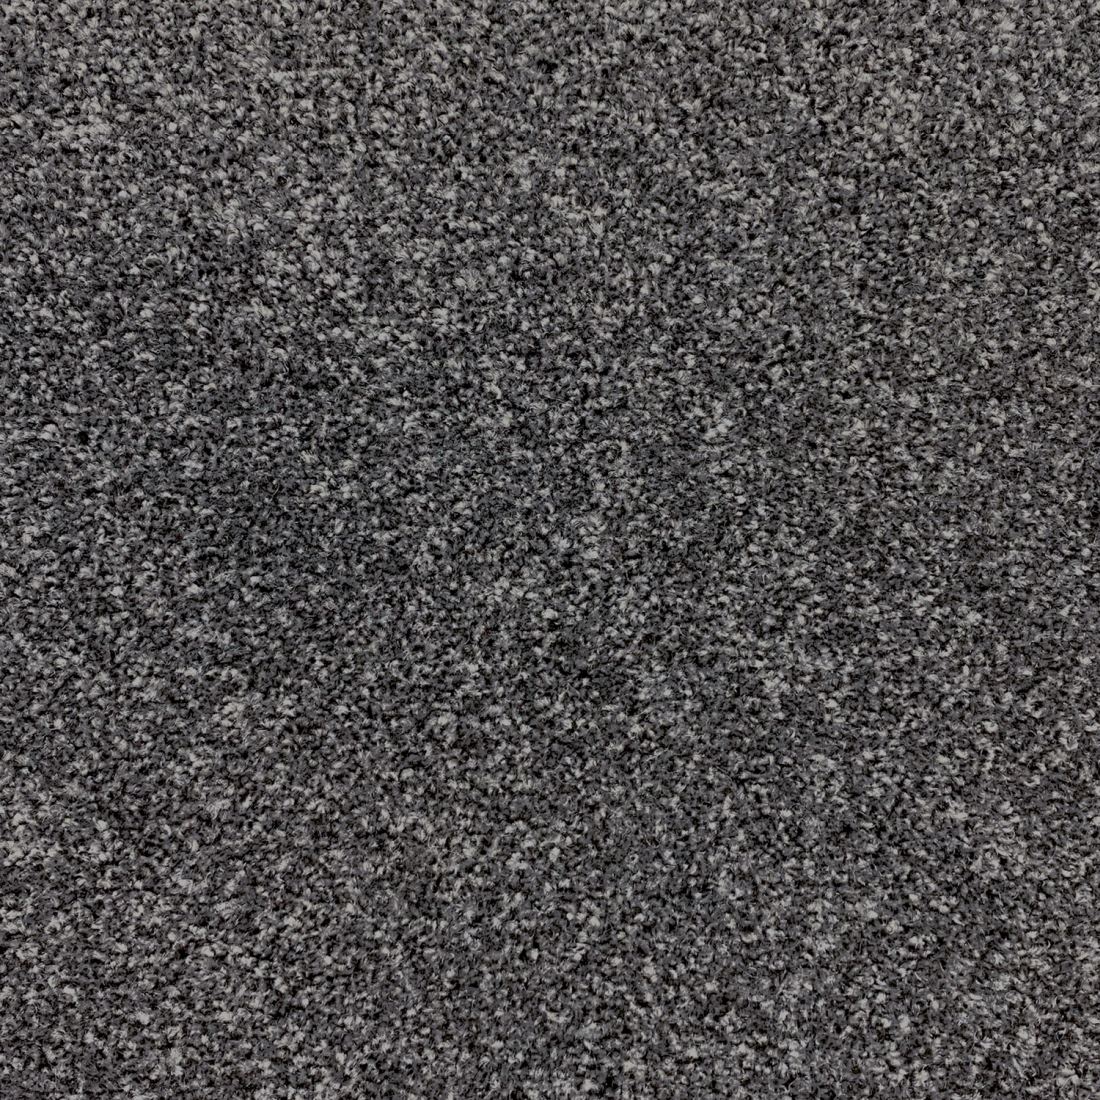 Invincible Rustic Stain Resistant Twist Carpet - Charcoal